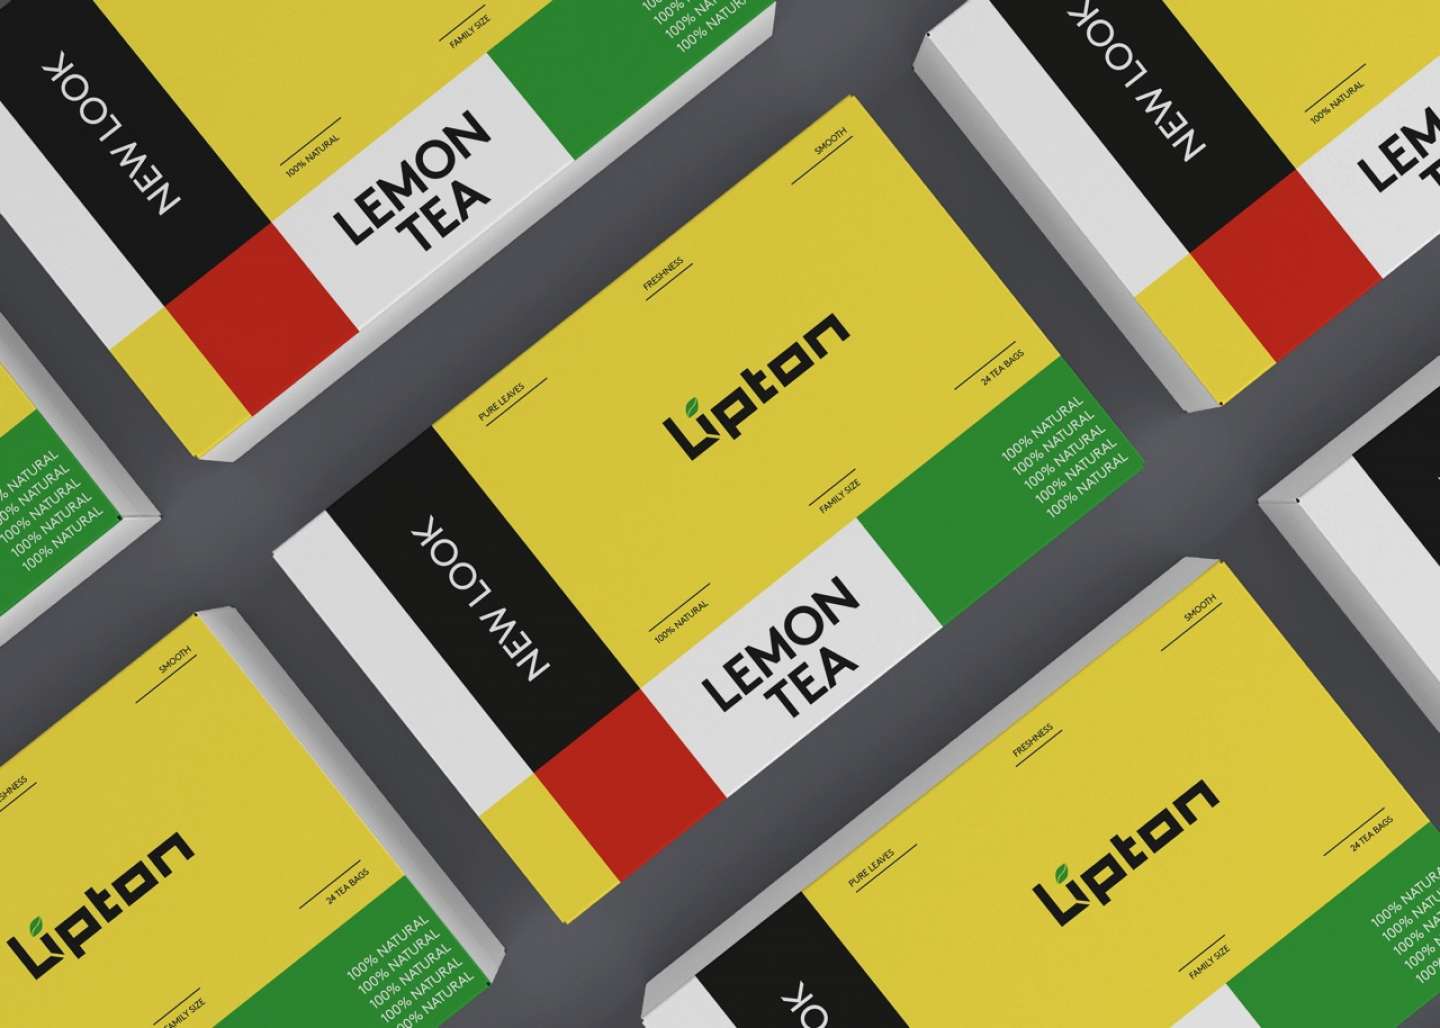 LIPTON Re-branding